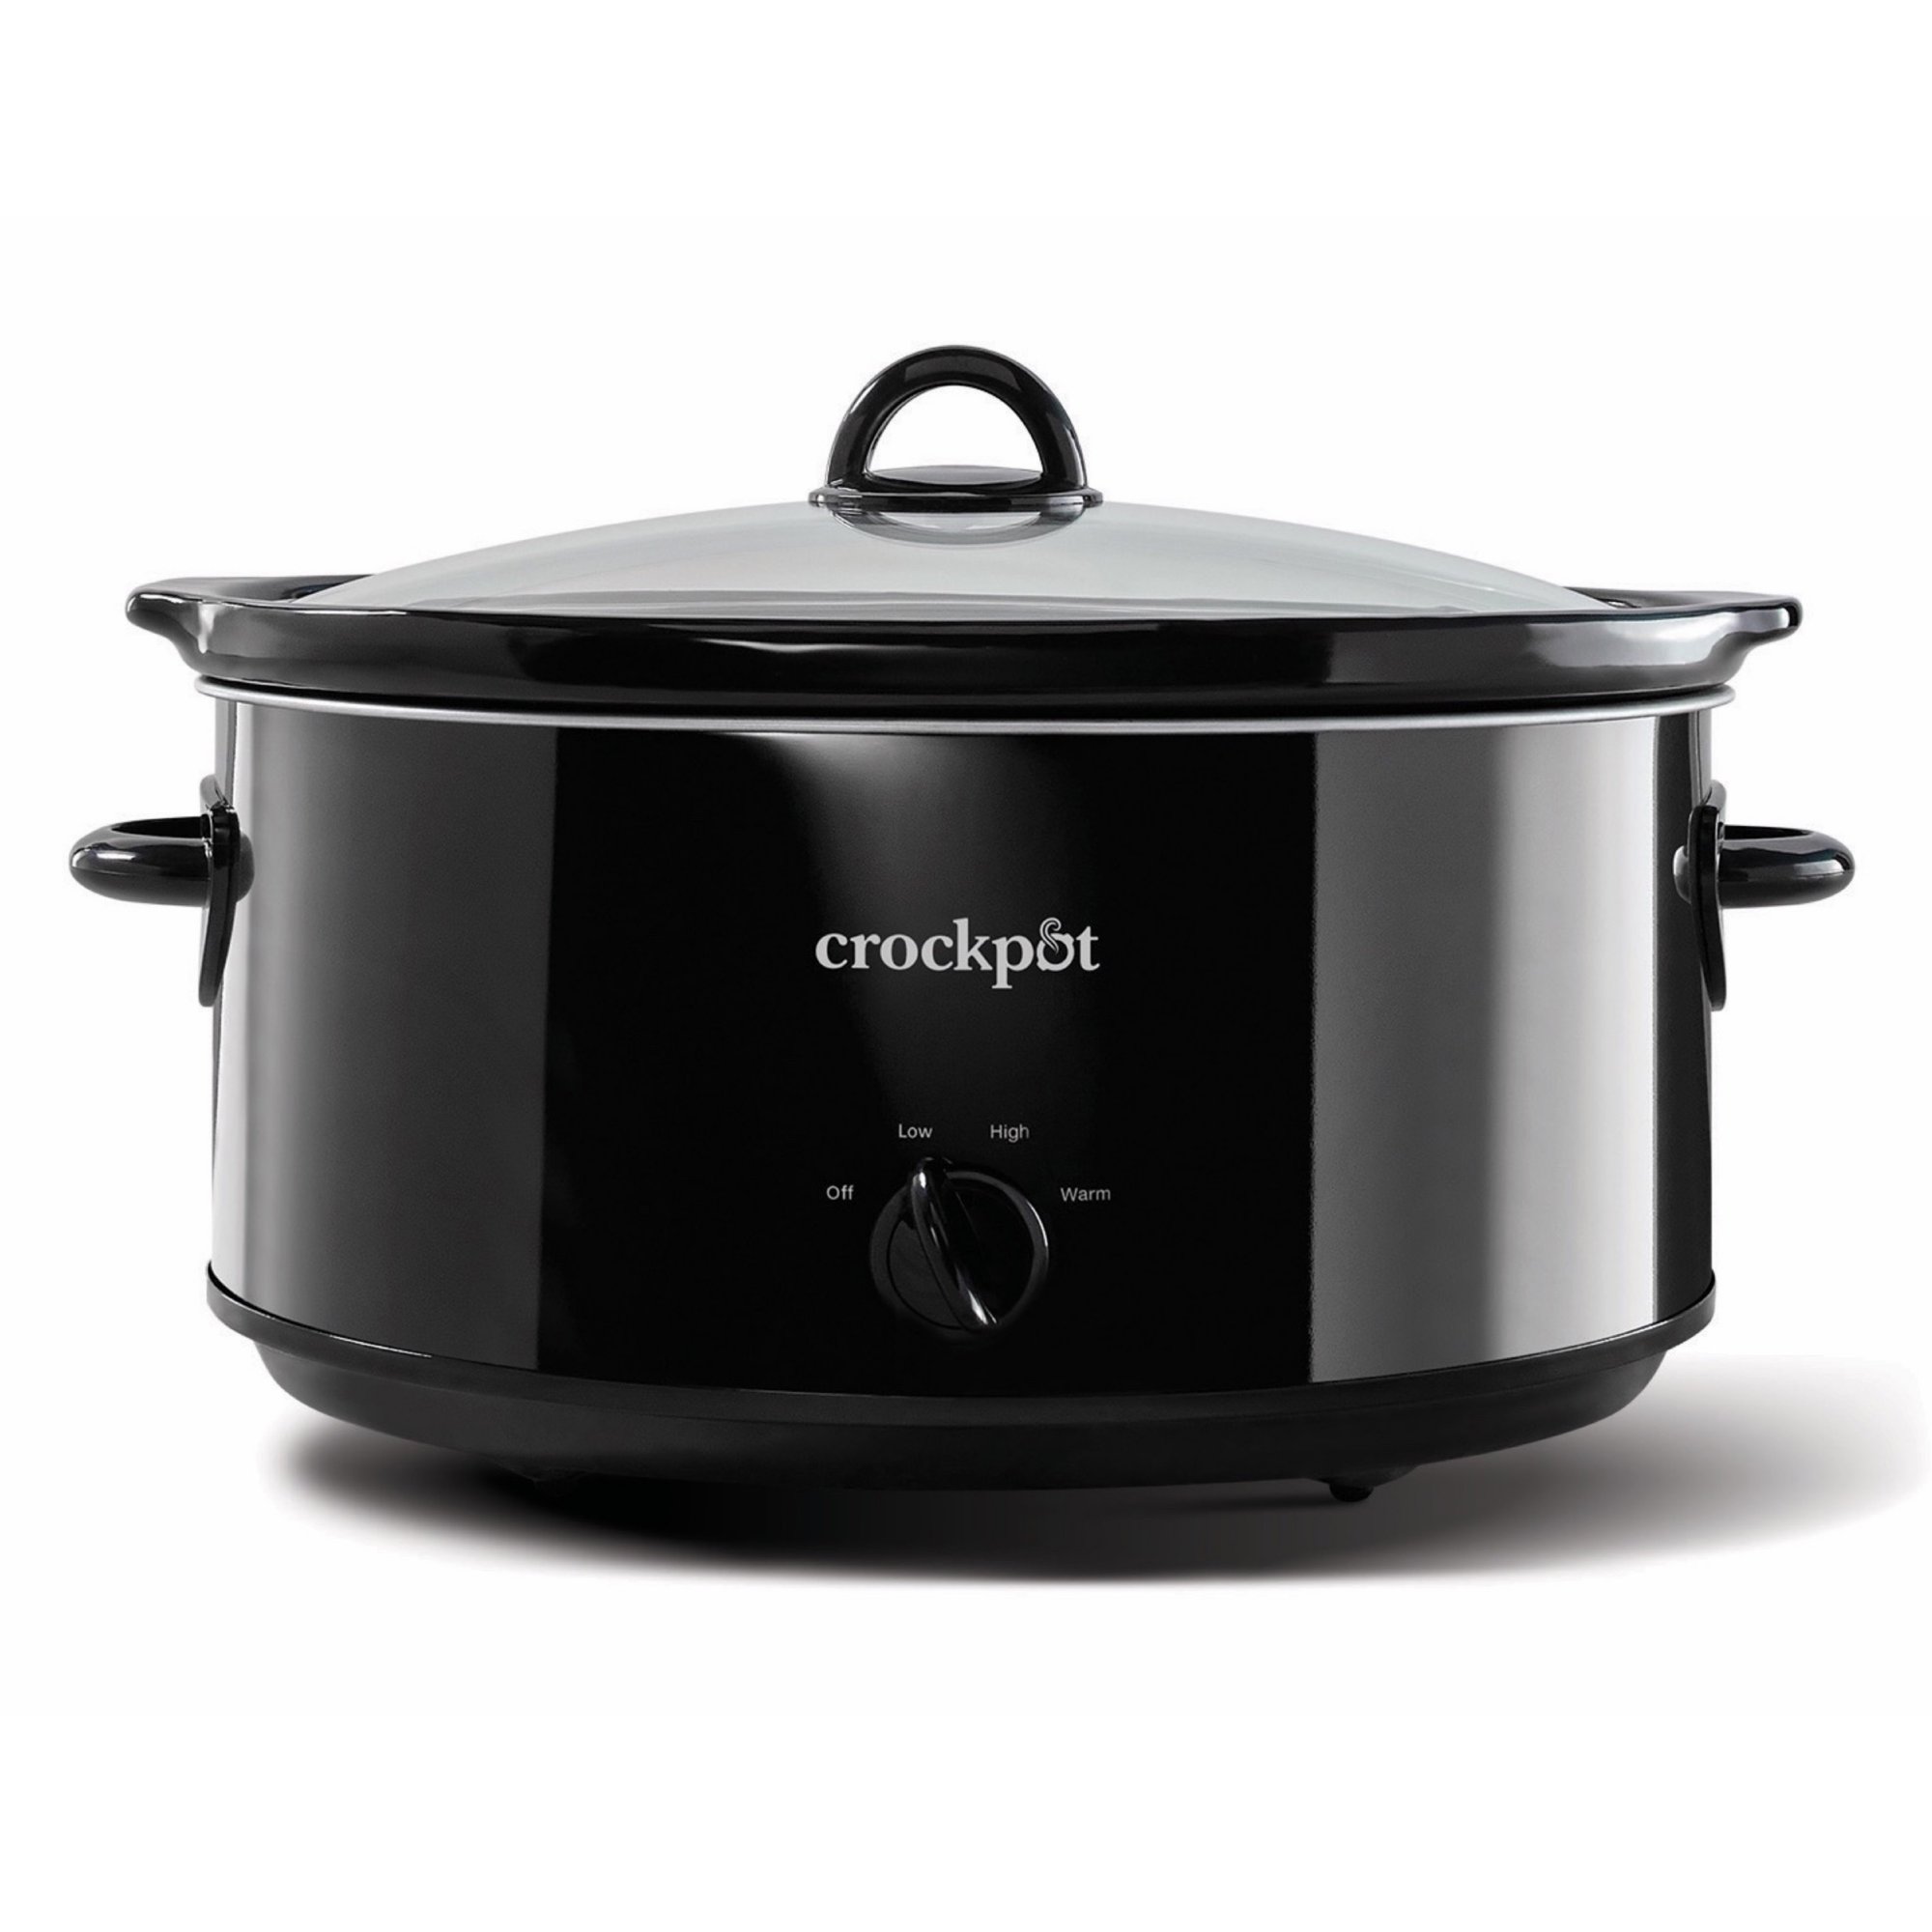 Crock-Pot Large 8 Quart Oval Manual Slow Cooker, Stainless Steel (SCV800-S)